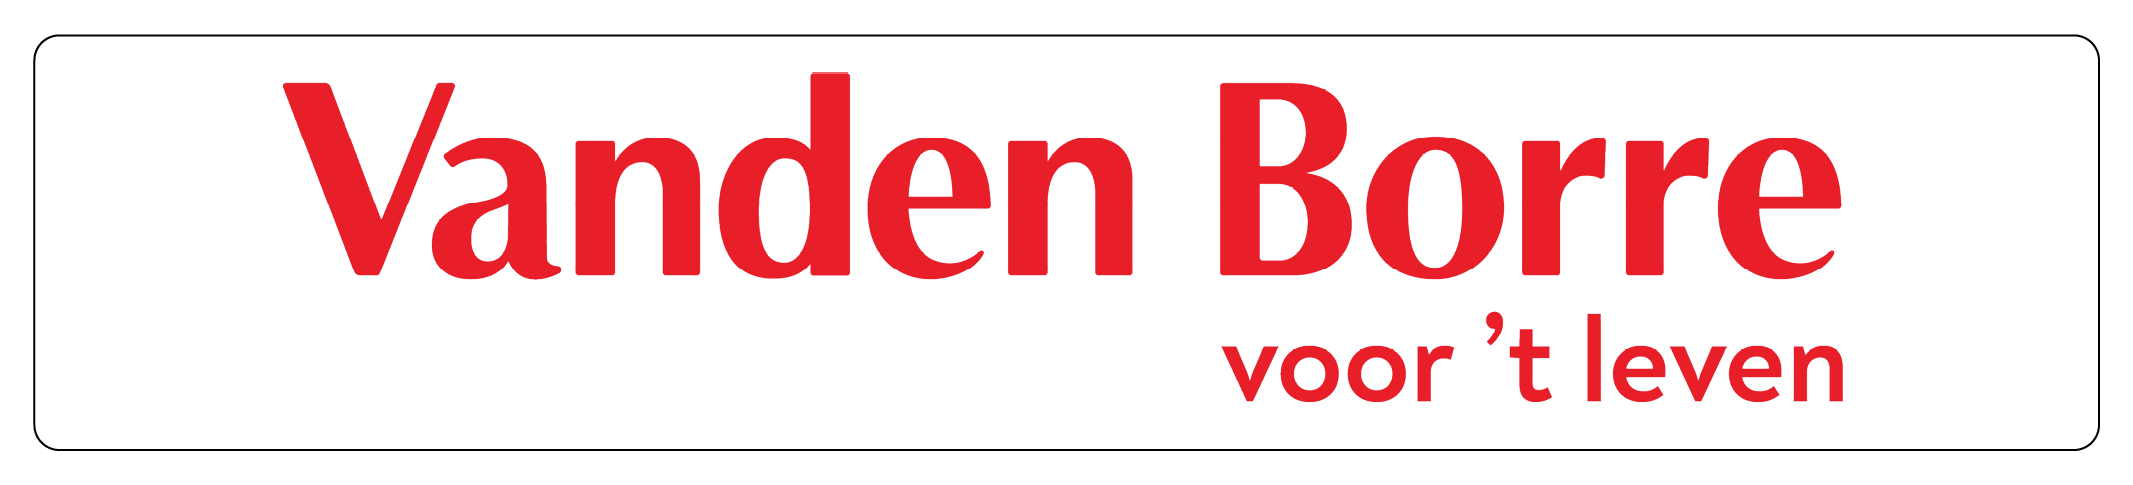 logo retailer Vanden Borre